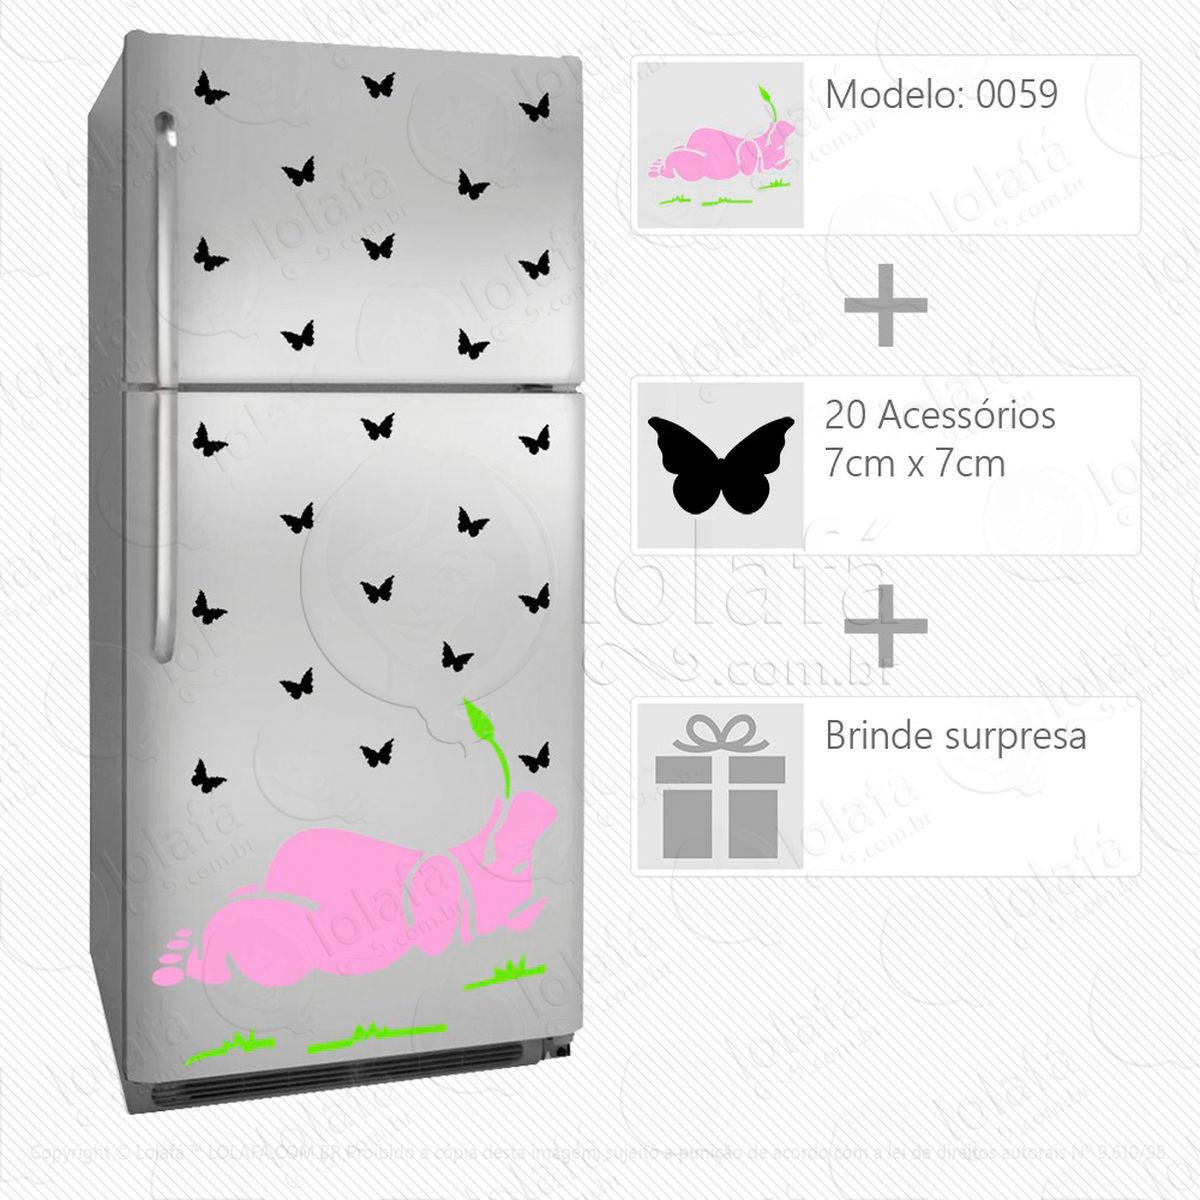 hipopótamo adesivo para geladeira e frigobar - mod:59